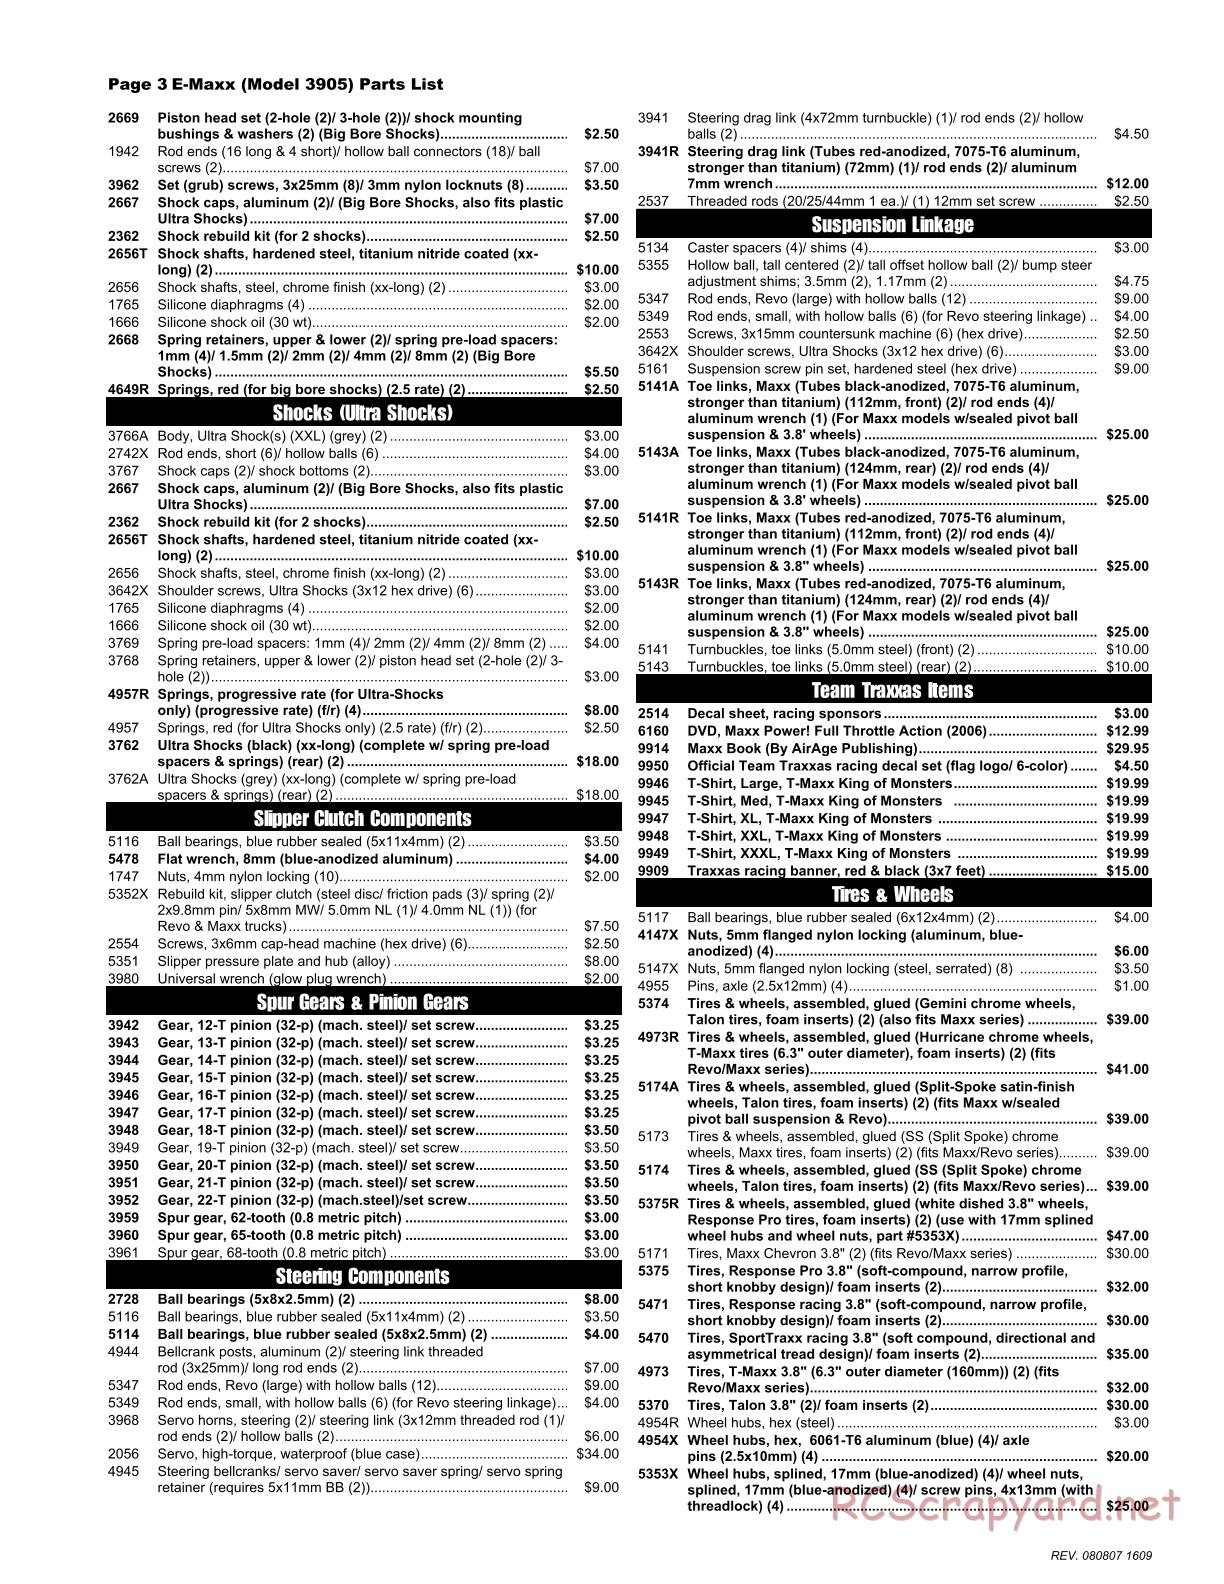 Traxxas - E-Maxx (2007) - Parts List - Page 3